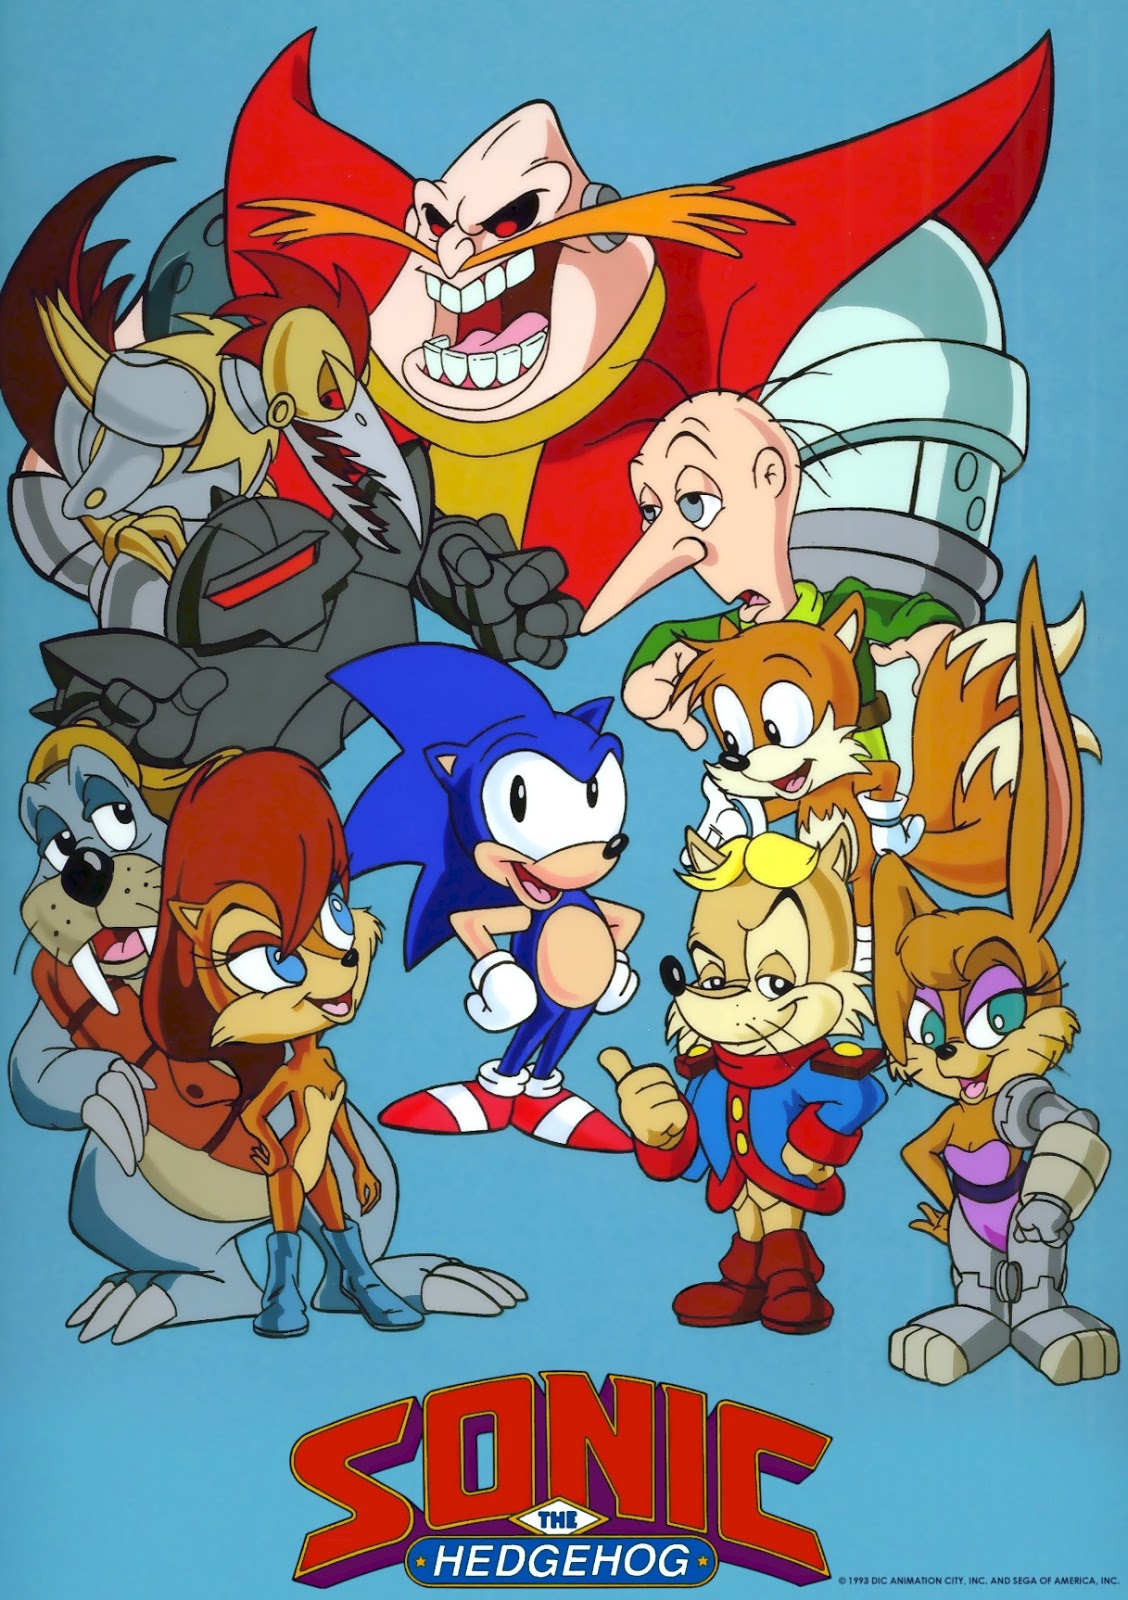 Sonic the Hedgehog - Super Sonic DVD 1993 by Sega & DIC Entertainment